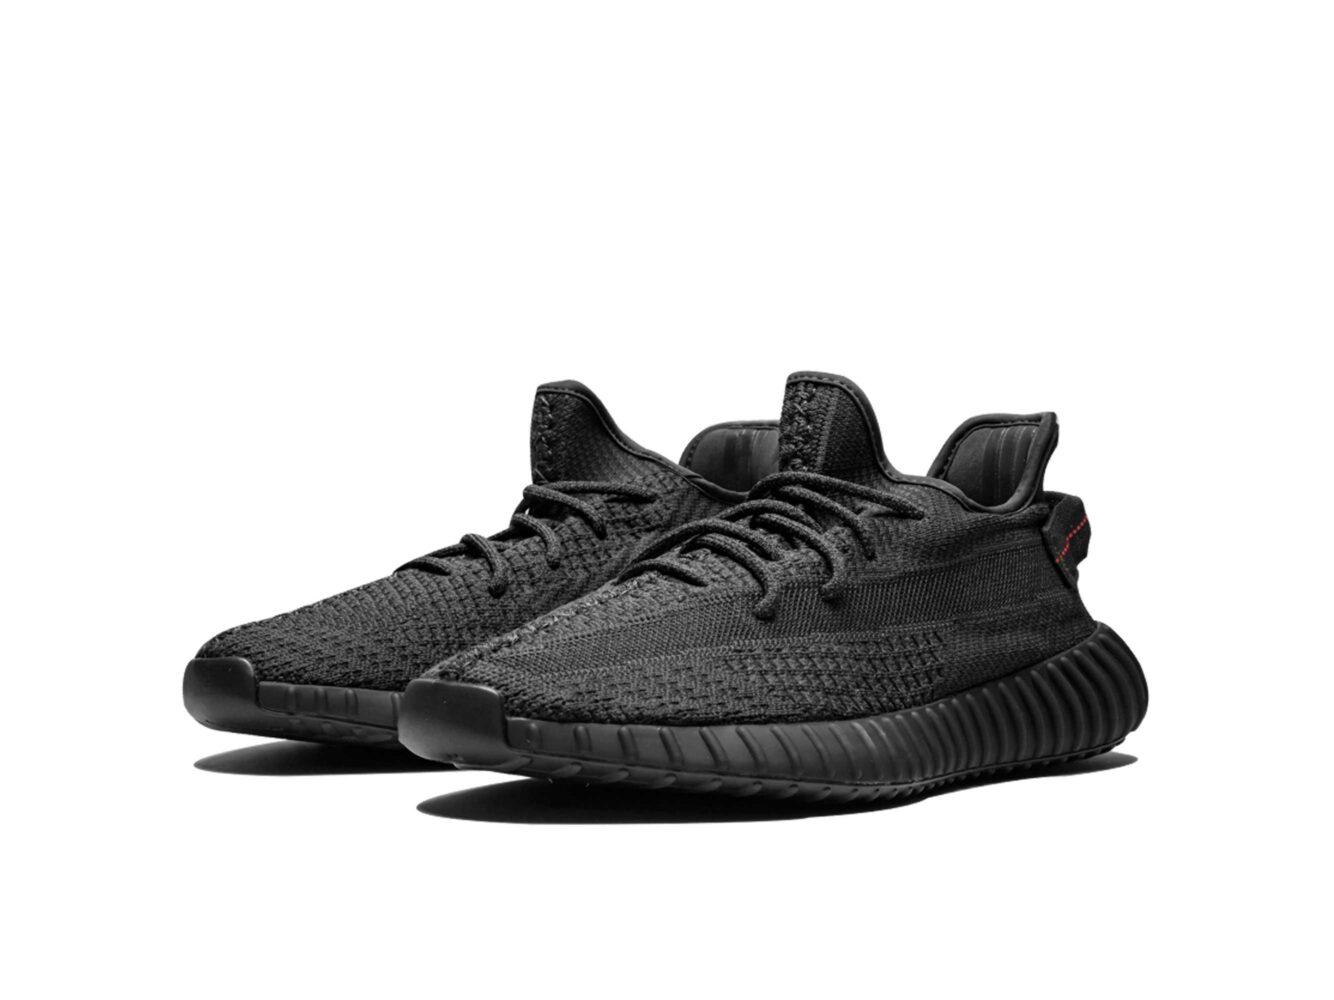 adidas yeezy boost 350 V2 reflective black static fu9007 купить